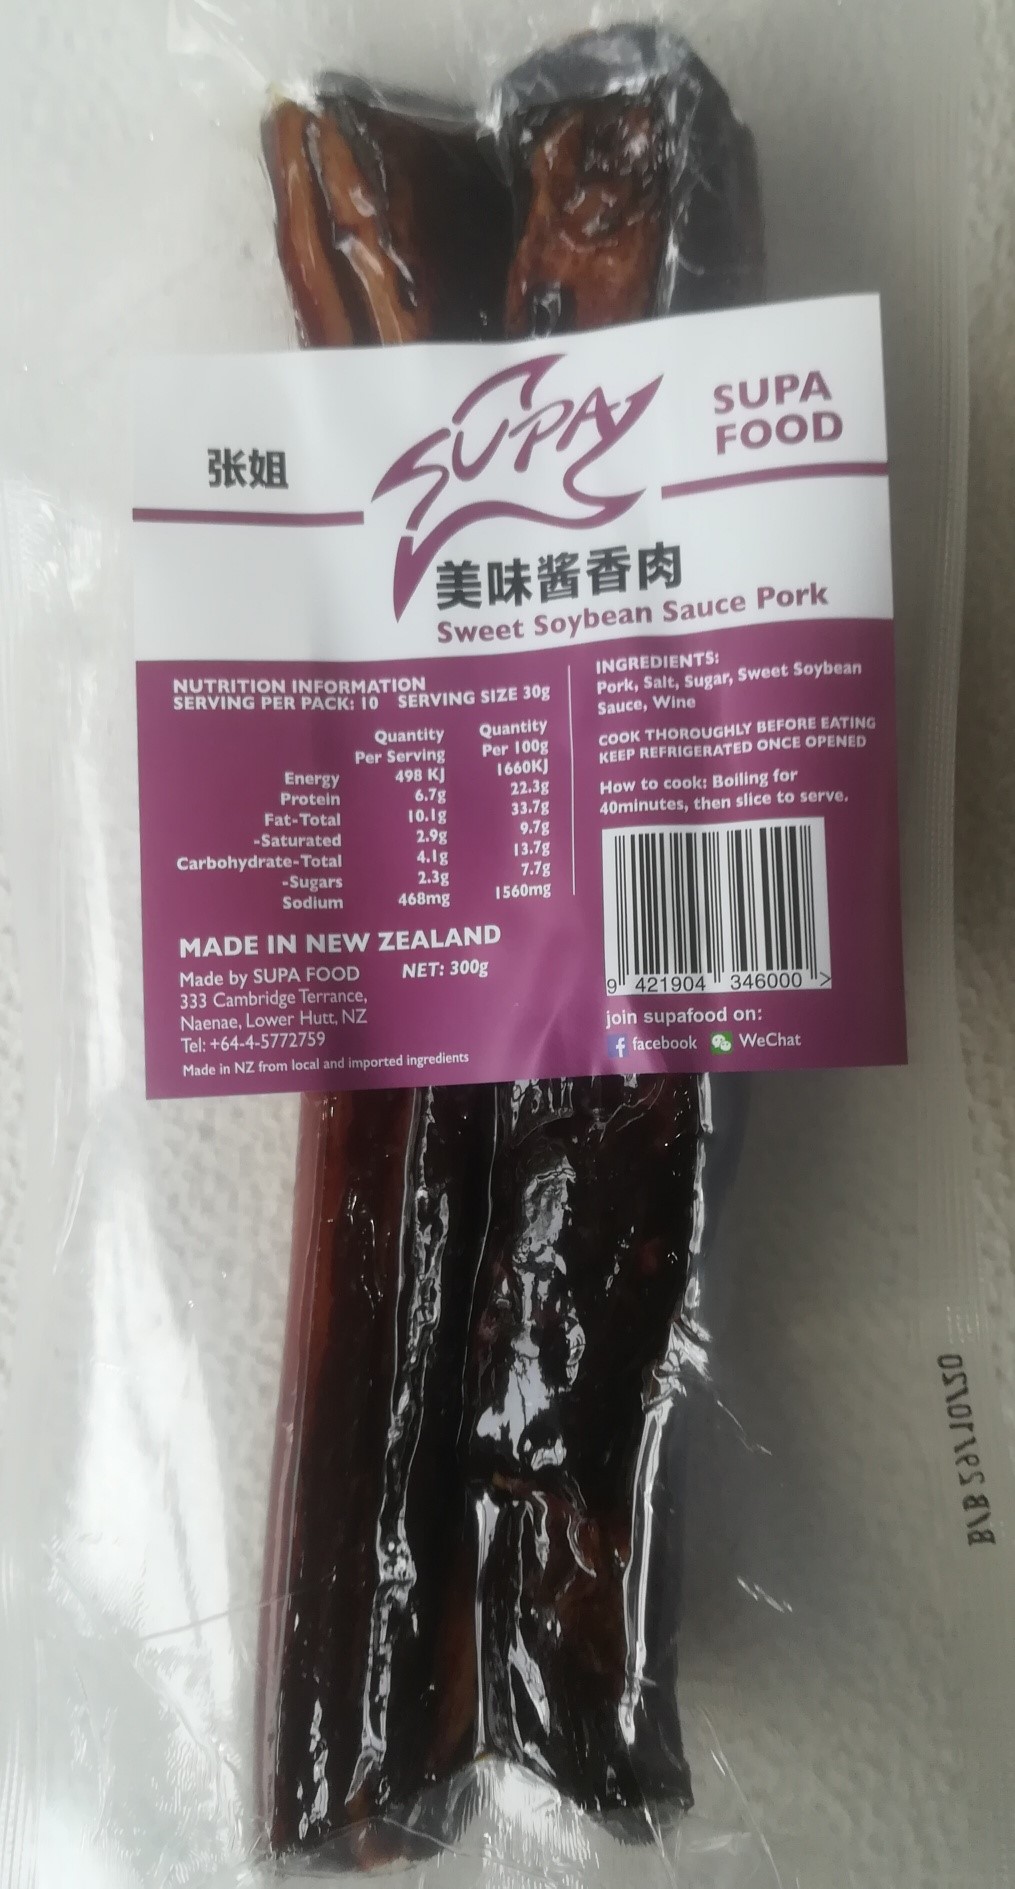 Supa Food brand Sweet Soybean Sauce Pork in a 300g plastic packet